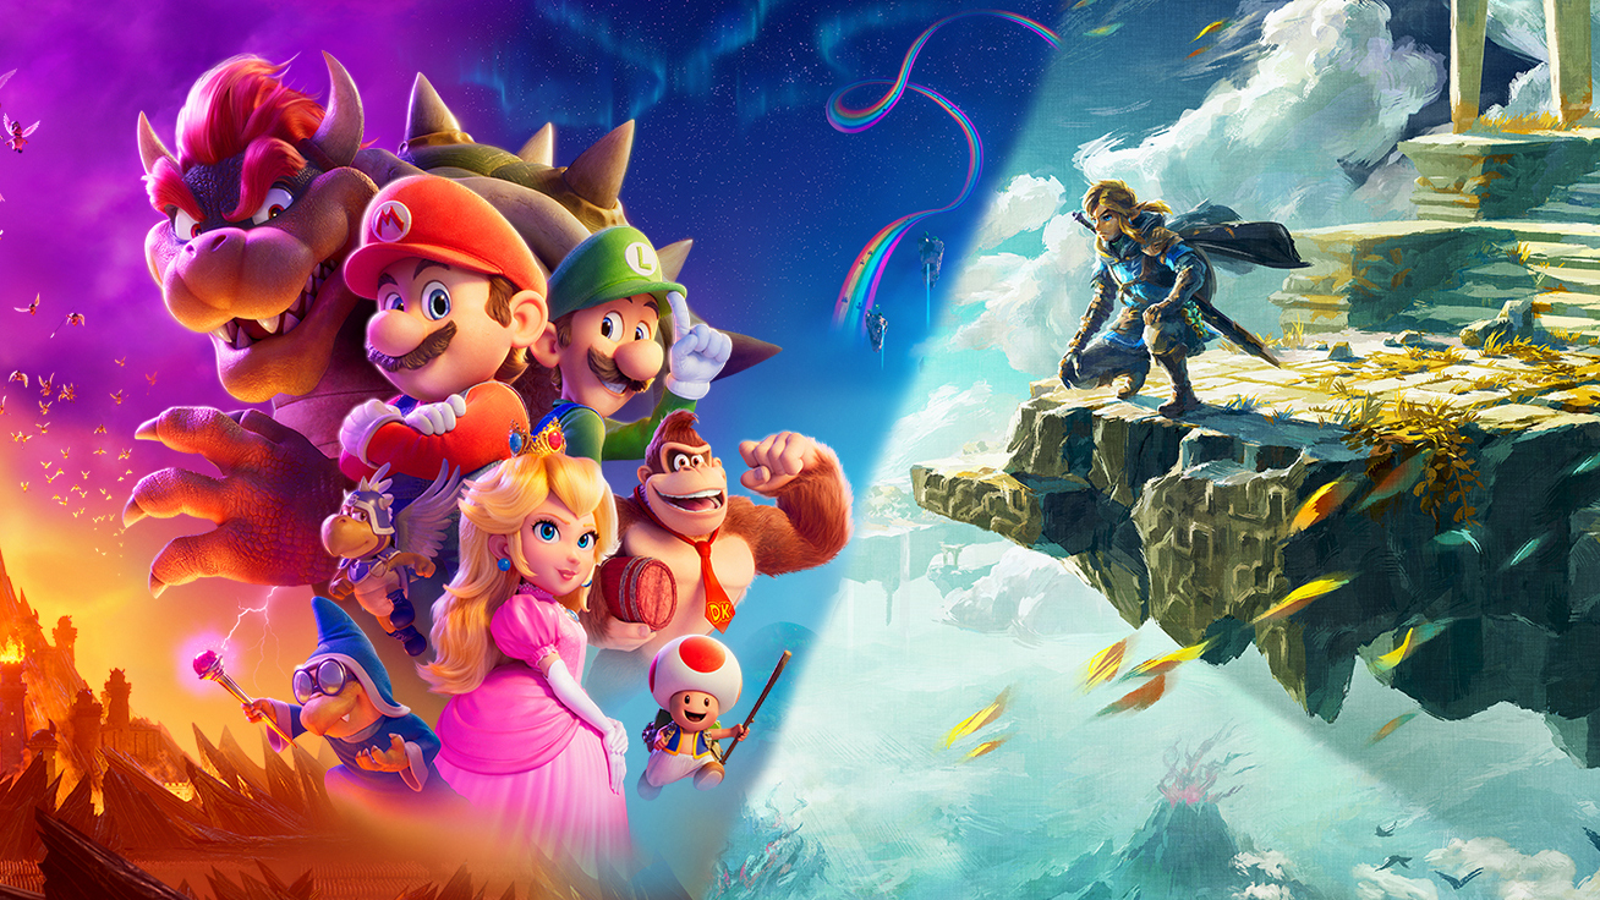 Mario VS Donkey Kong GBA Remake Revealed During Nintendo Direct - IGN